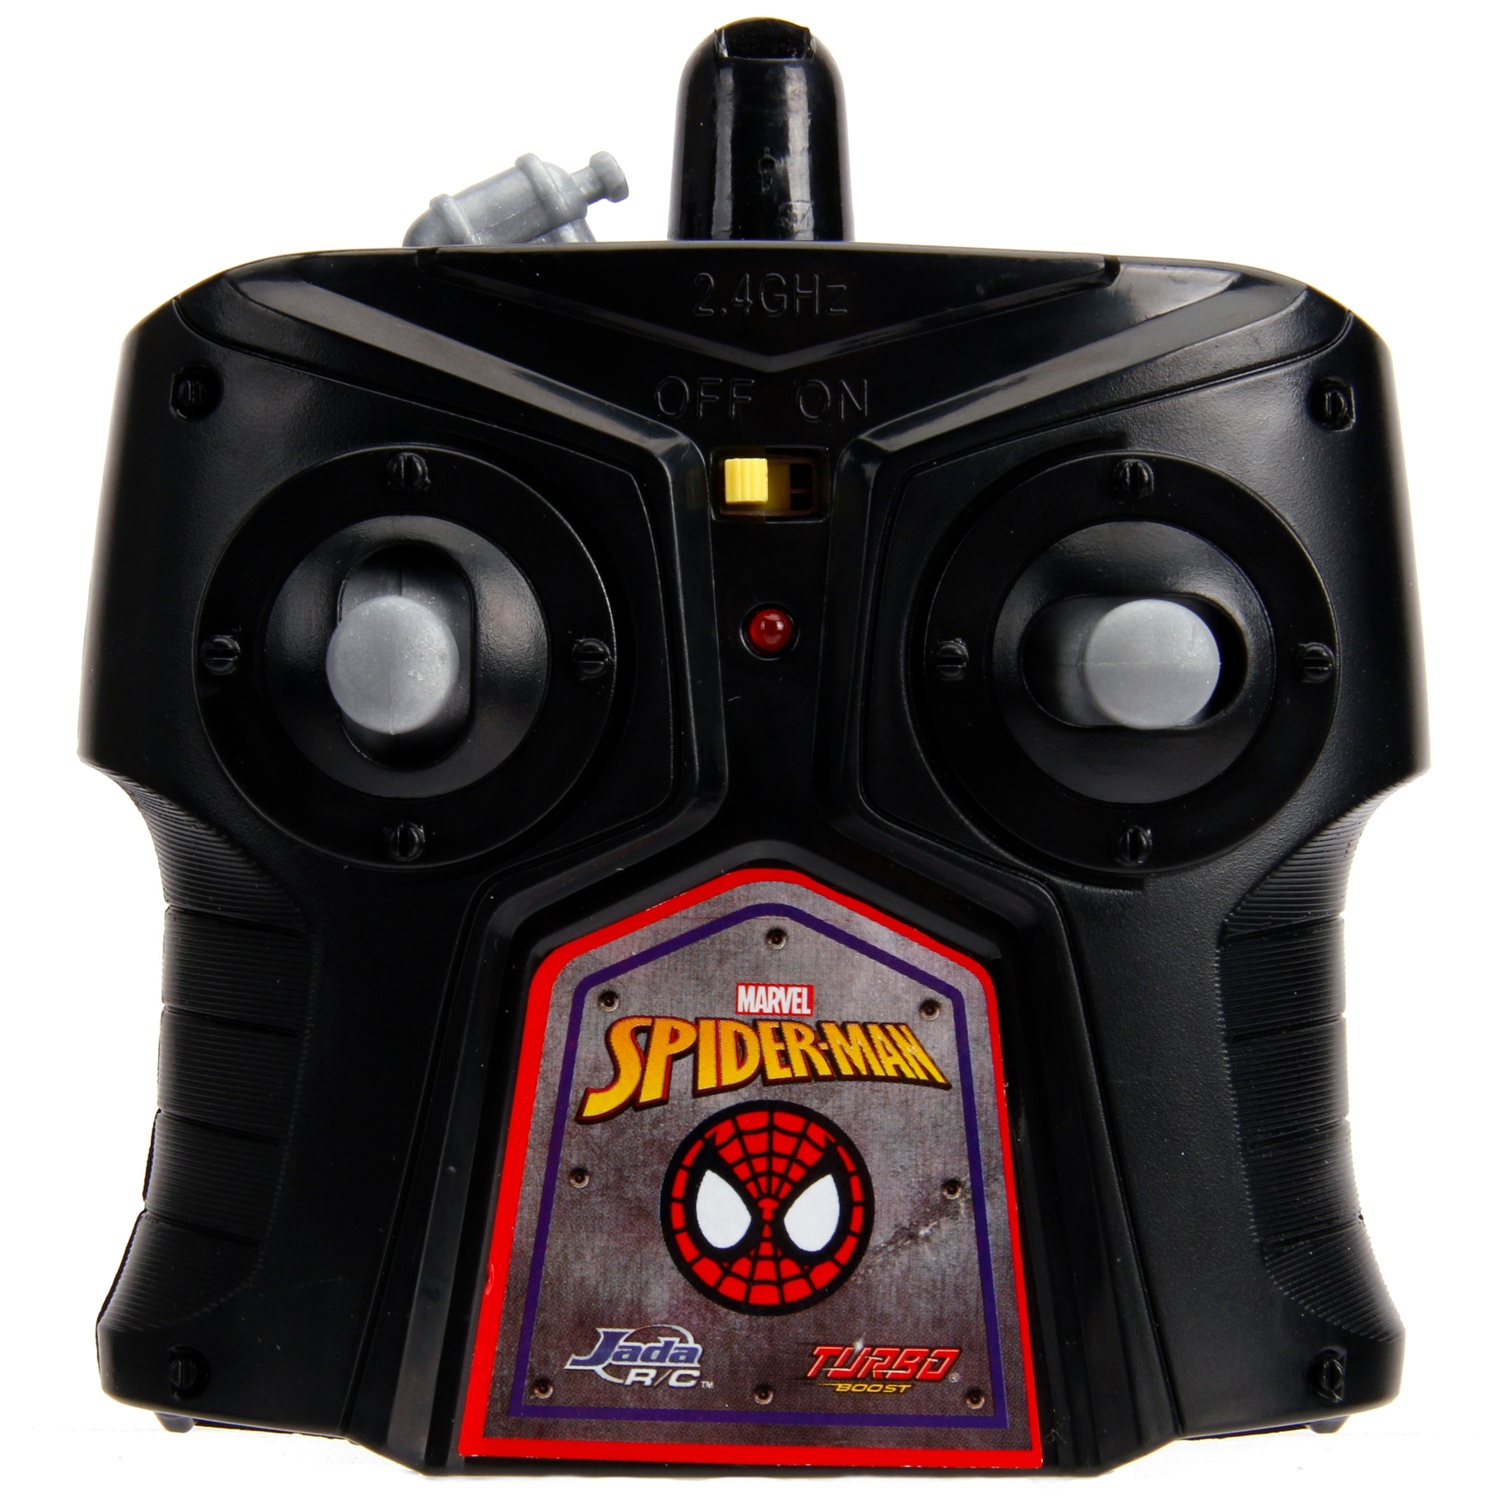 Radiostyrd bil - Marvel Spider-Man RC Buggy